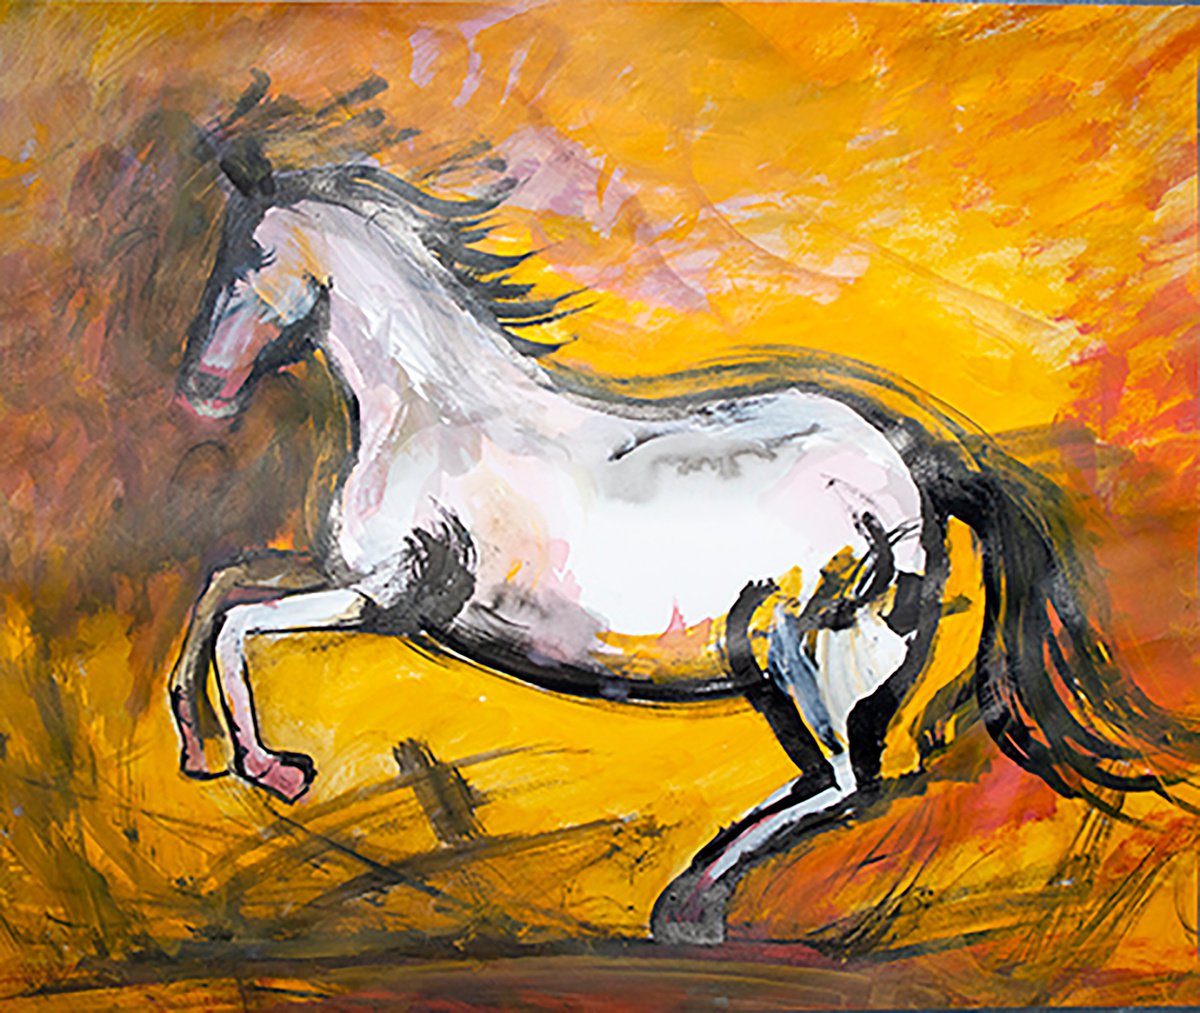 Prancing white horse by Rene Goorman